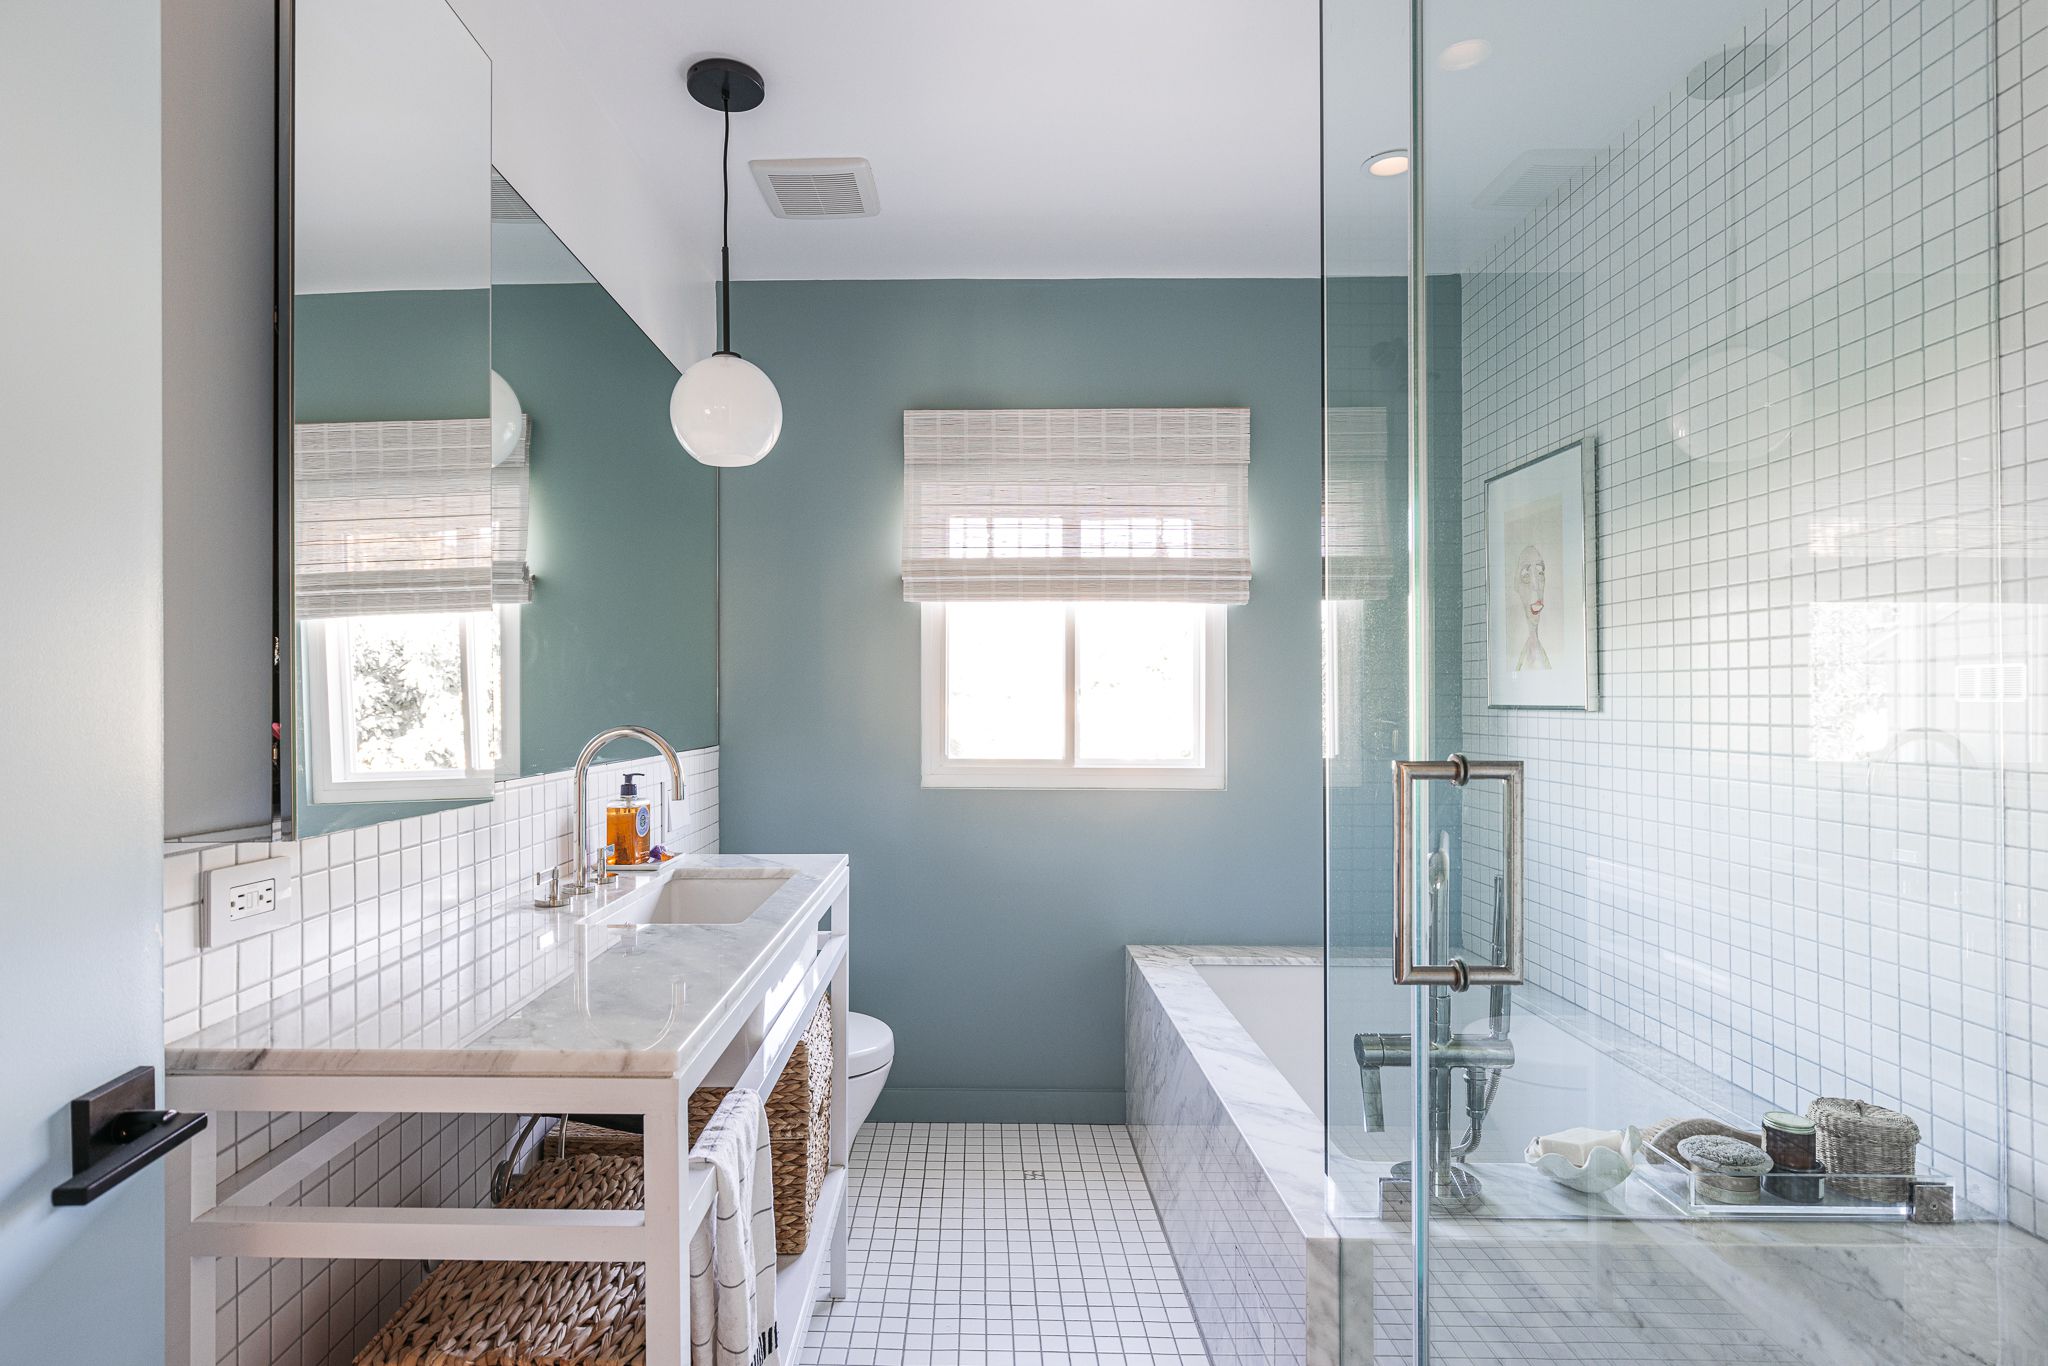 14 Pretty Tile Ideas for Small Bathrooms